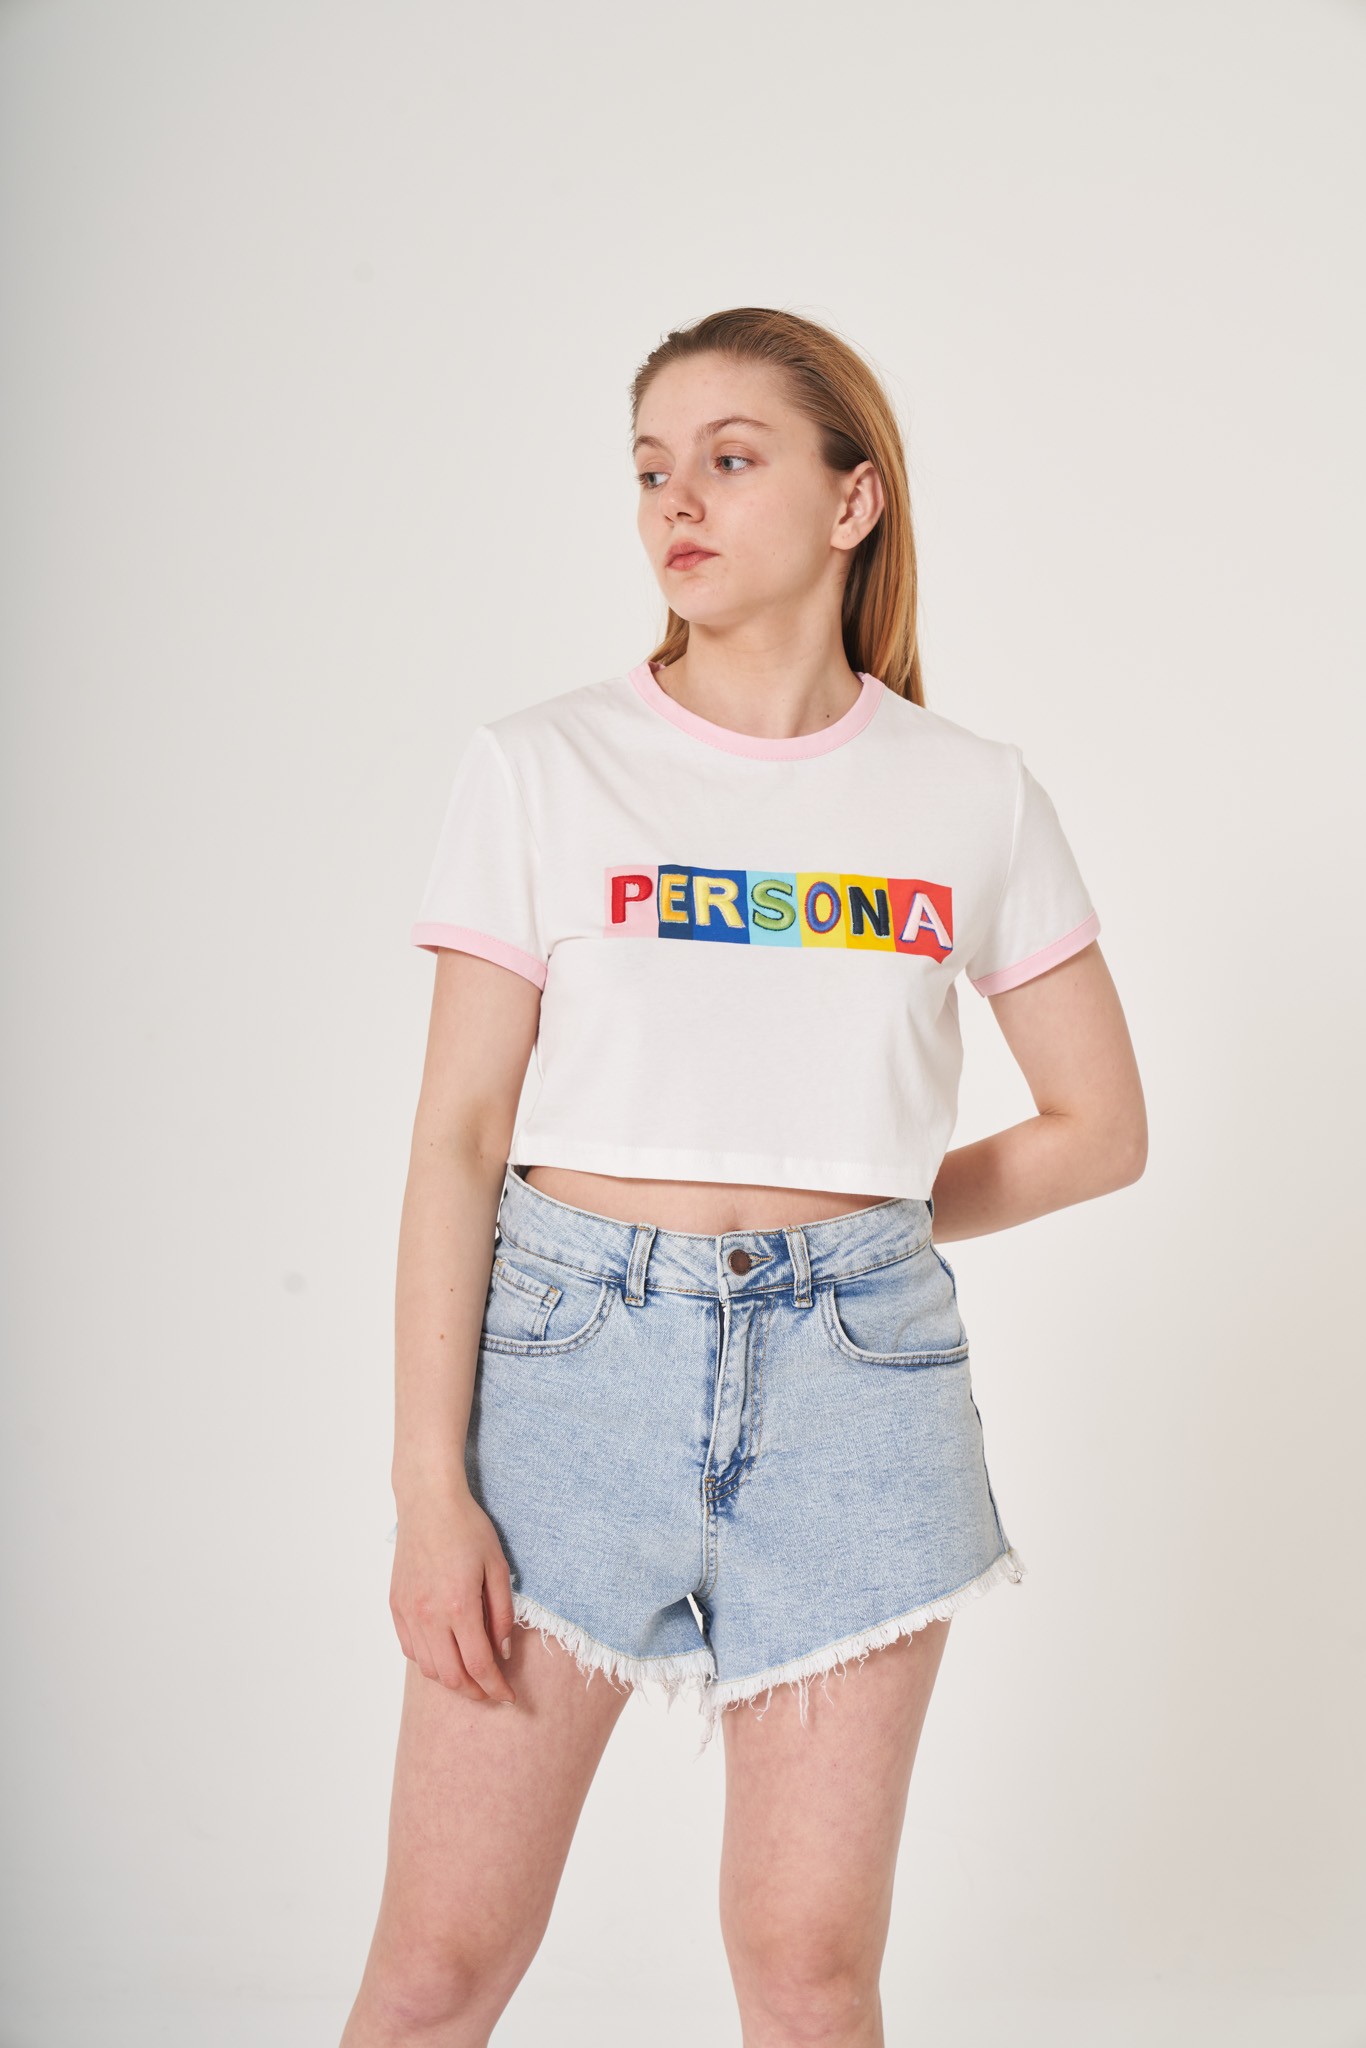 Renkli Baskılı T-shirt Persona